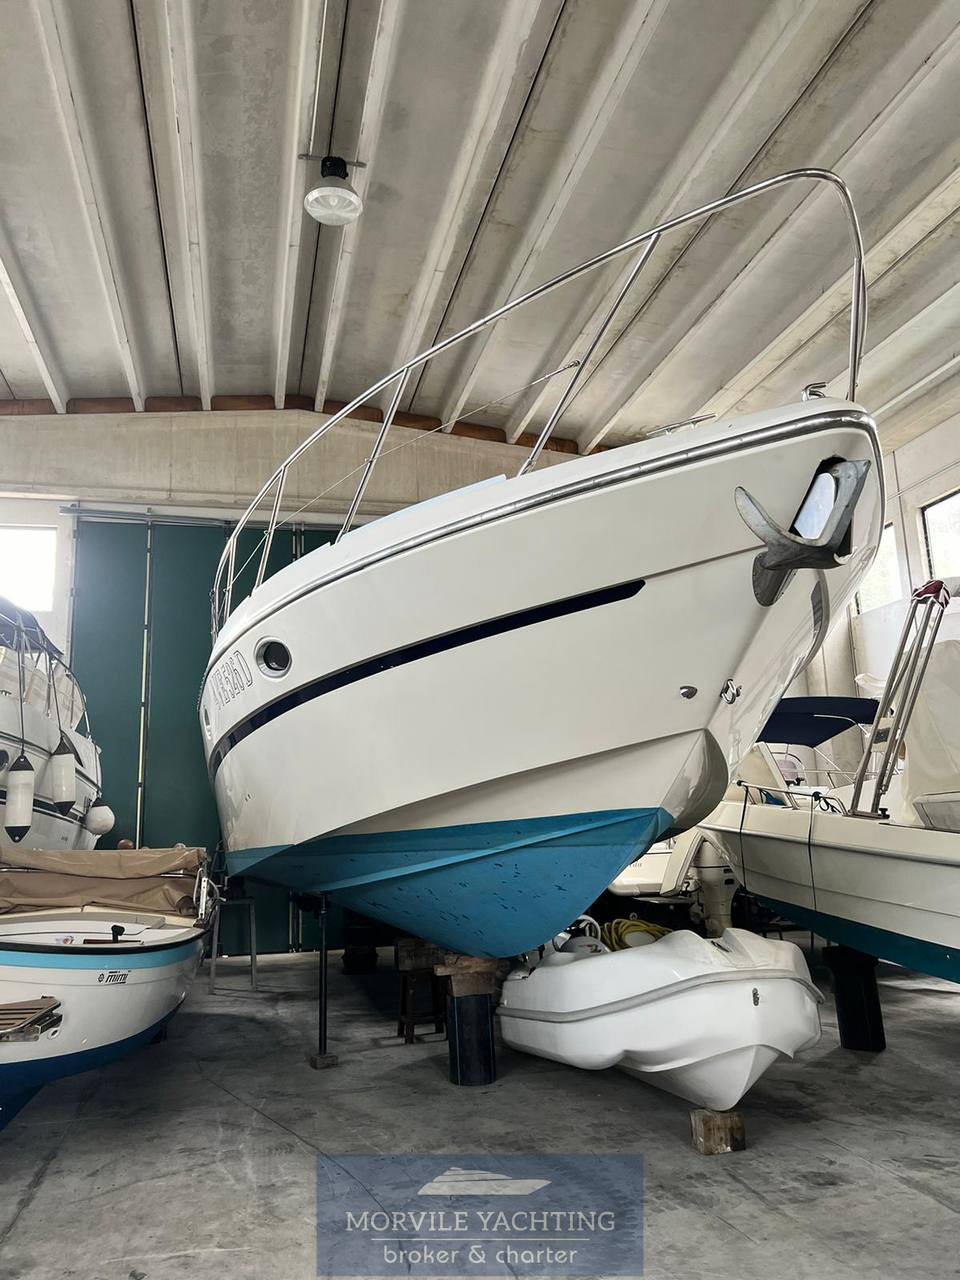 CRANCHI Mediterranee 41 Motor boat used for sale